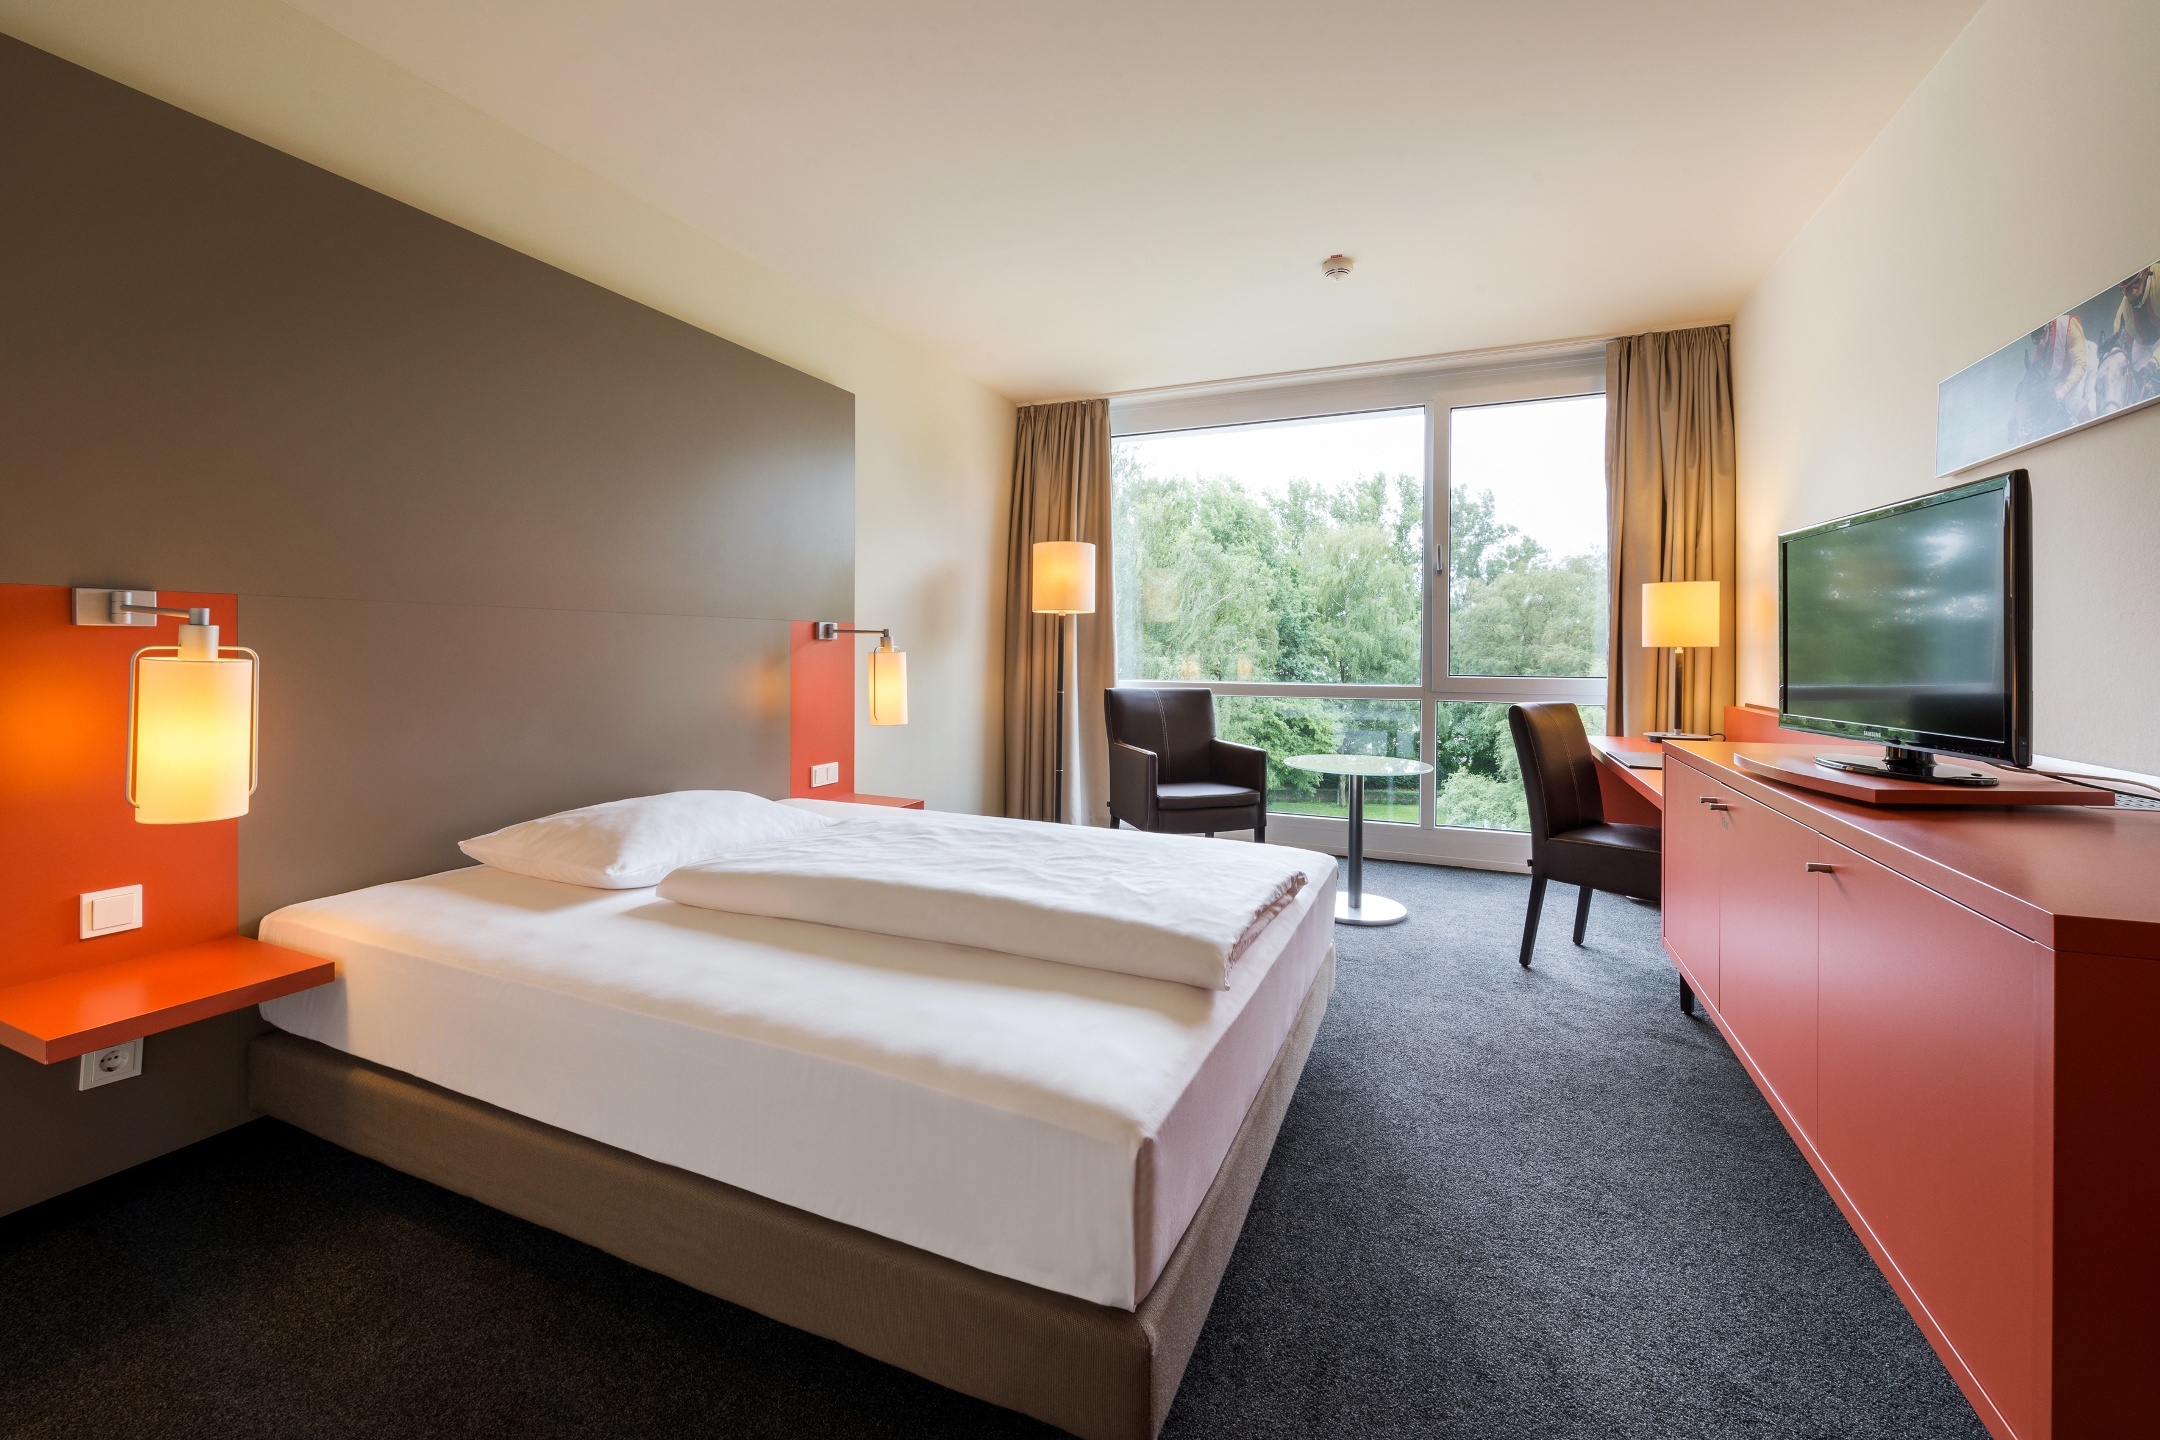 Comfort Zimmer im ATLANTIC Hotel Galopprennbahn 